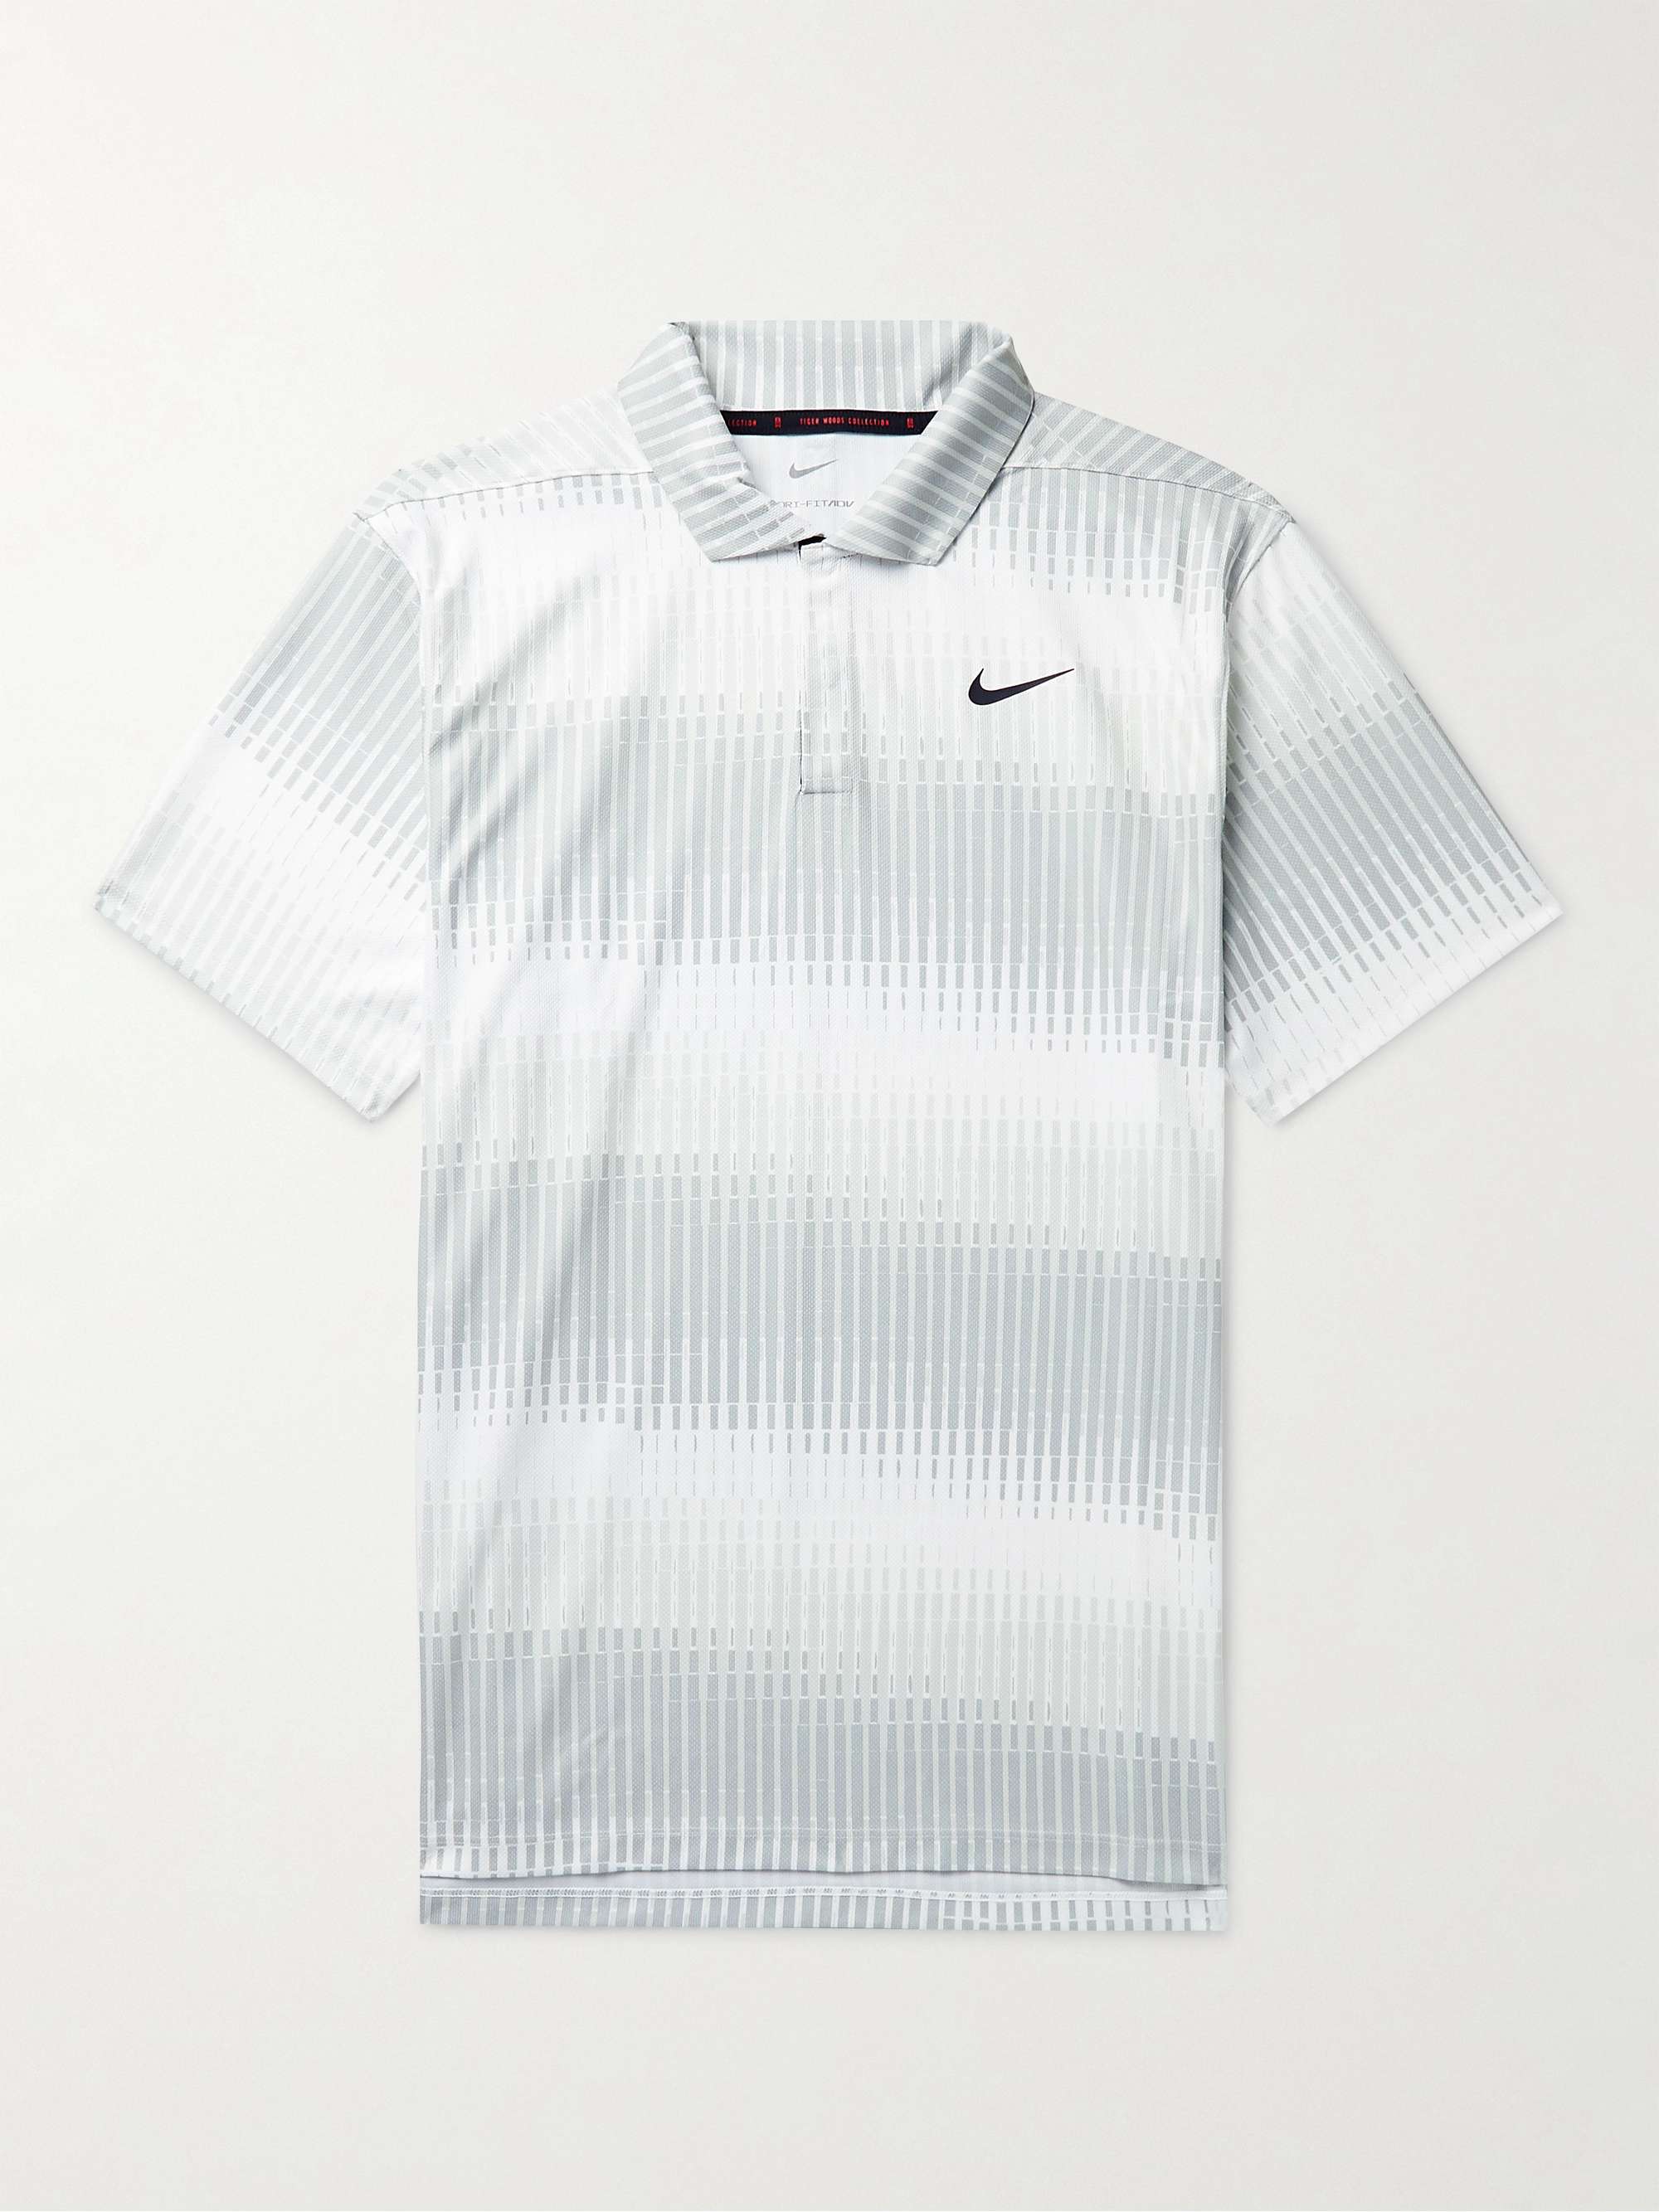 NIKE GOLF Tiger Woods Dri-FIT ADV Printed Golf Polo Shirt | MR PORTER